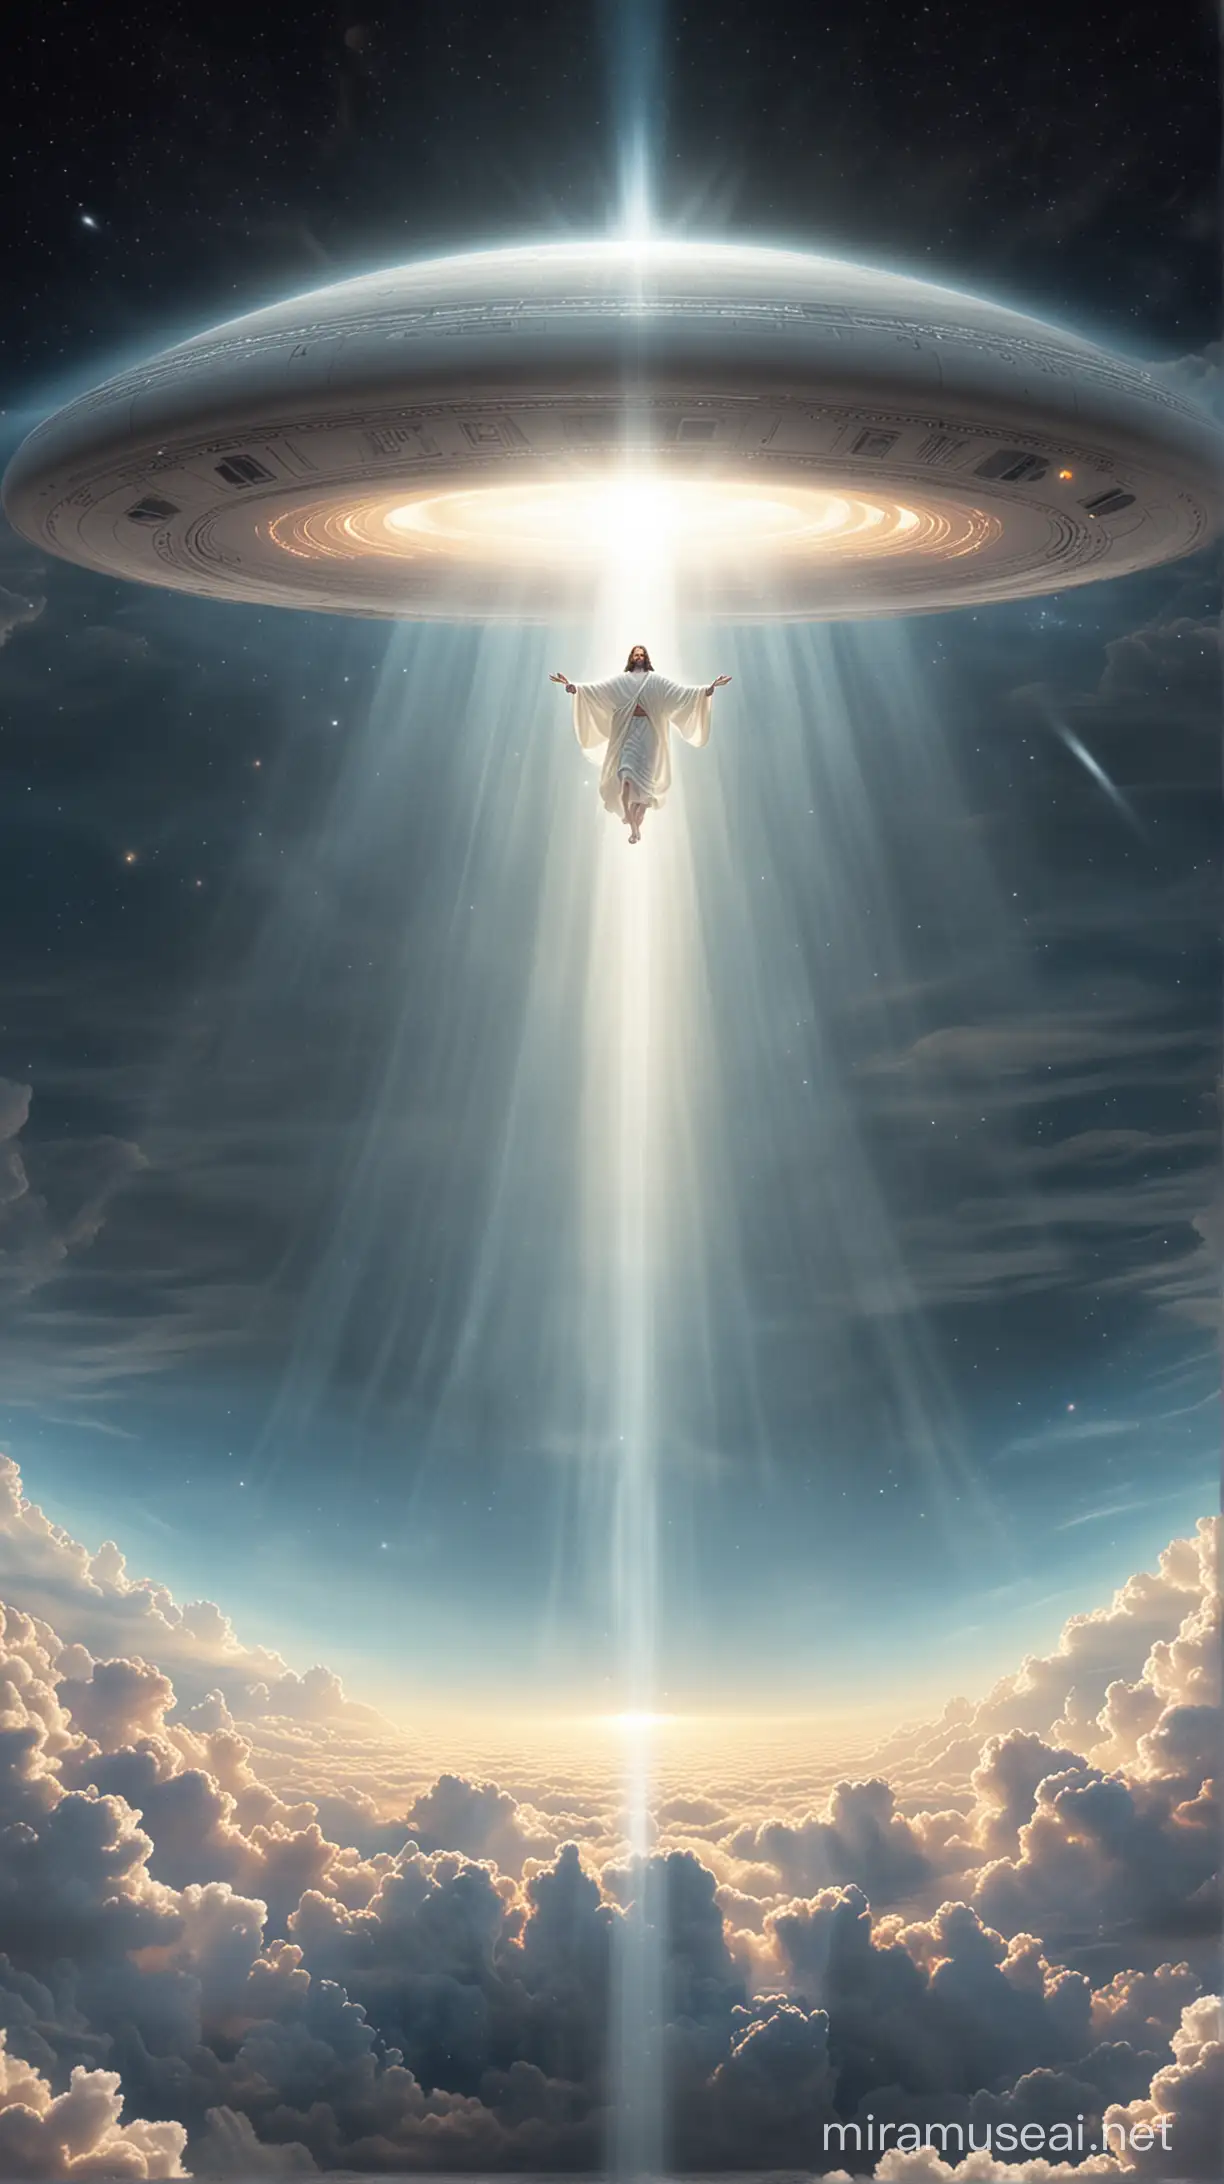 Jesus christ inside a ufo